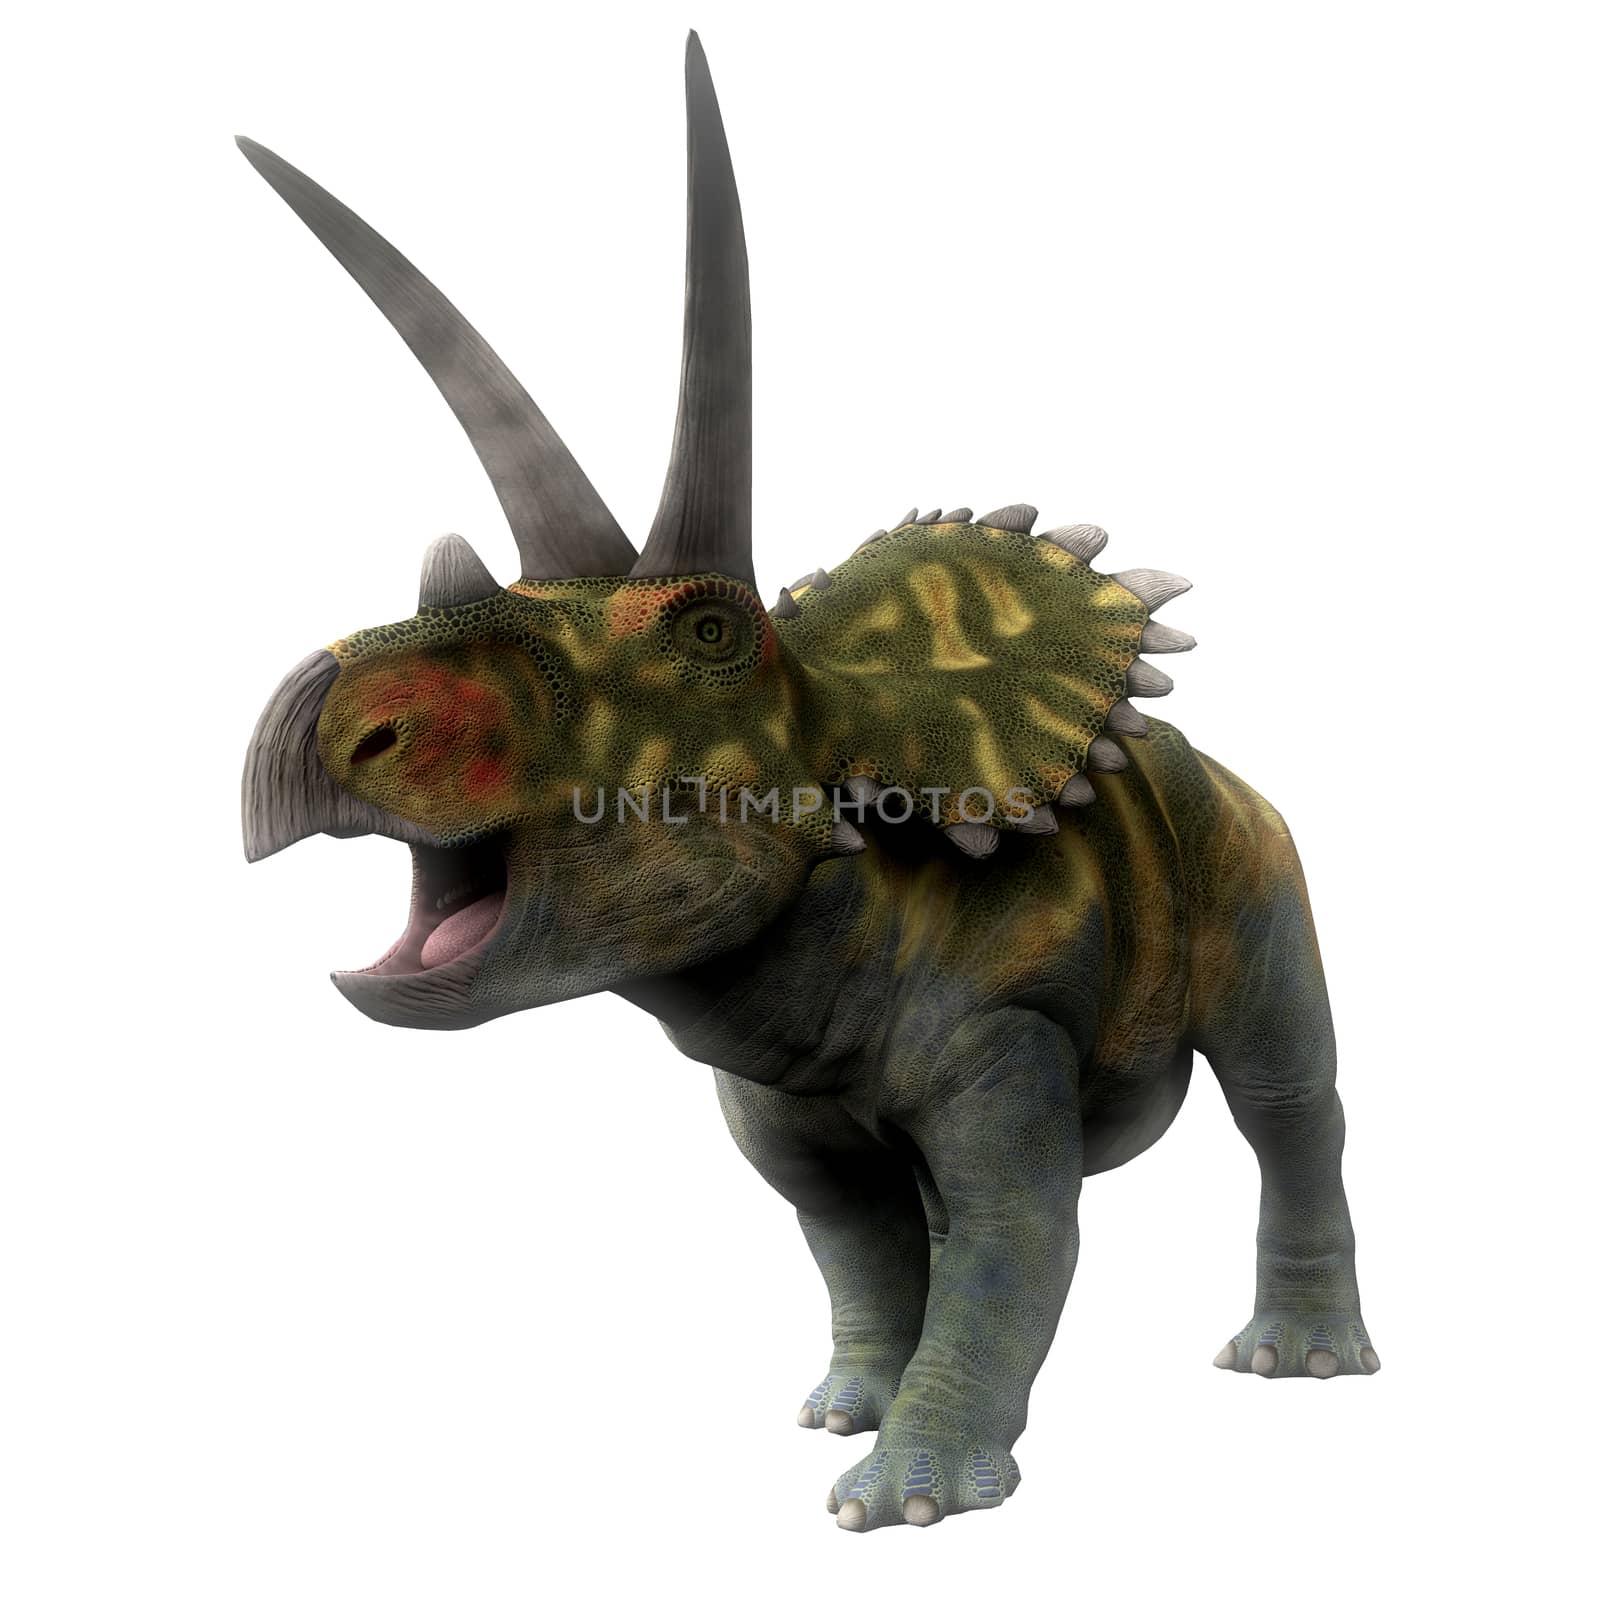 Coahuilaceratops Dinosaur on White by Catmando